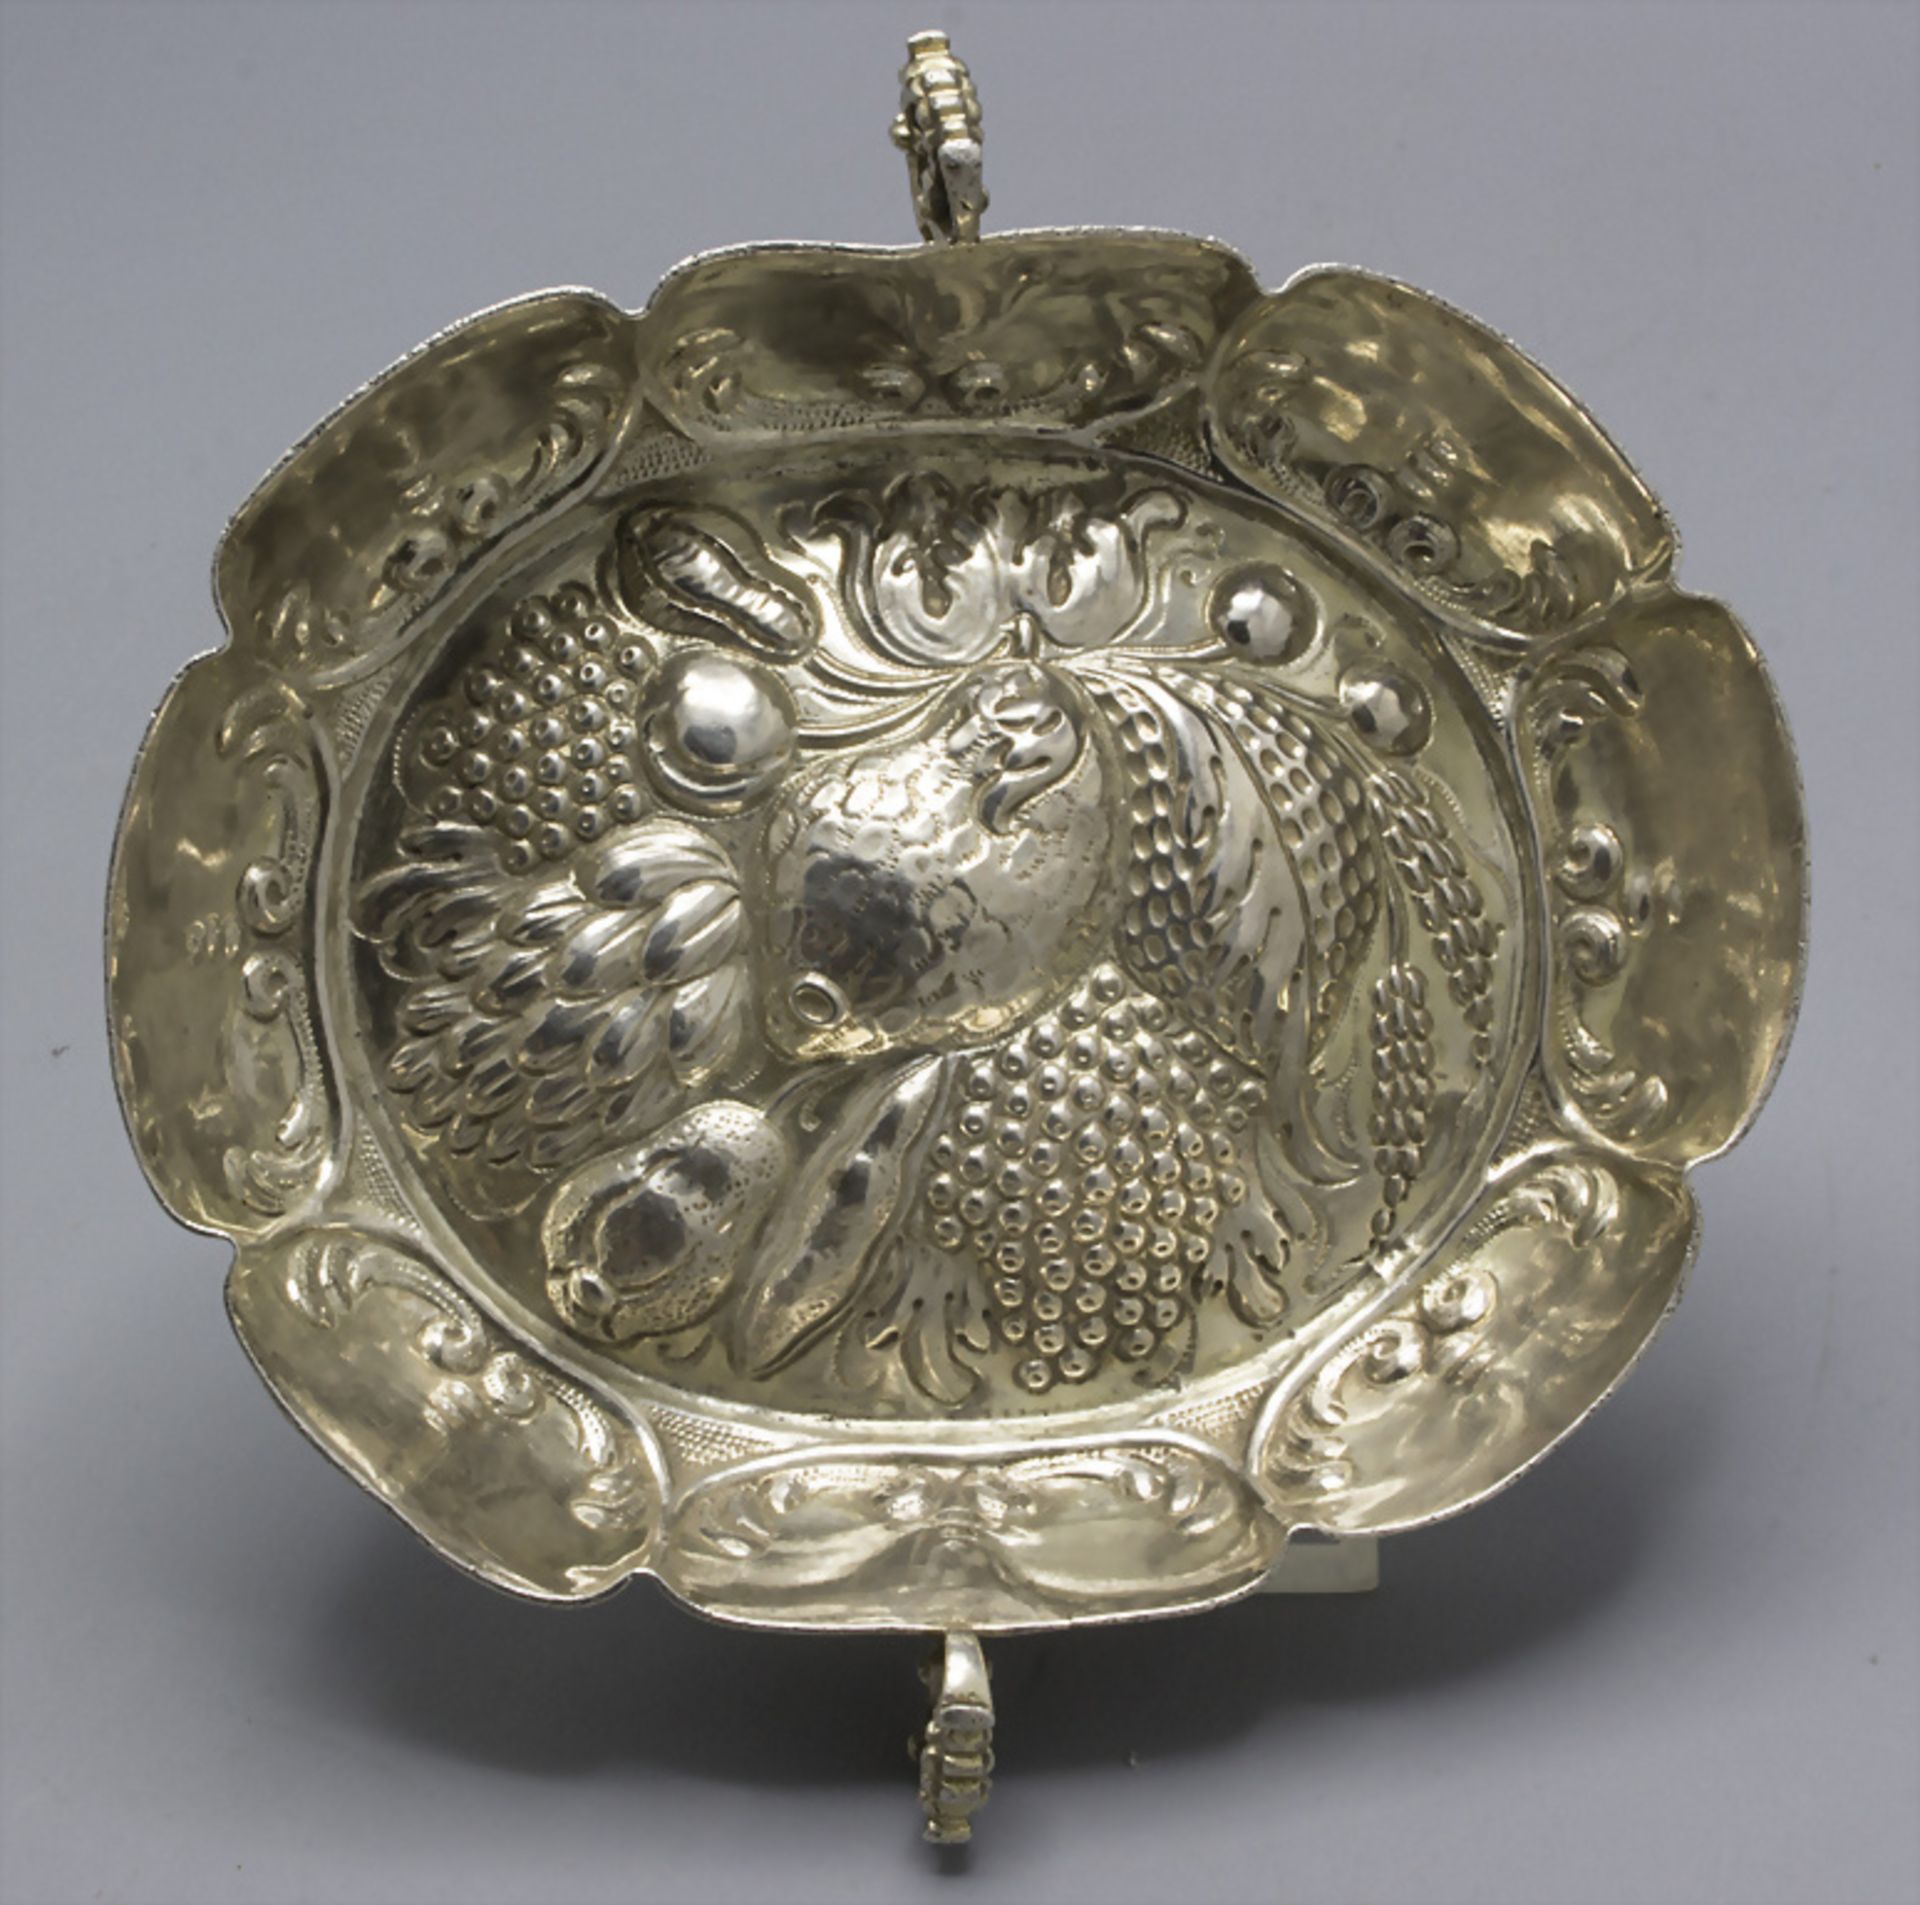 Barock Etrog Schale / A Baroque silver Etrog bowl, Johann Georg Oxner (Meister 1677-1712), München